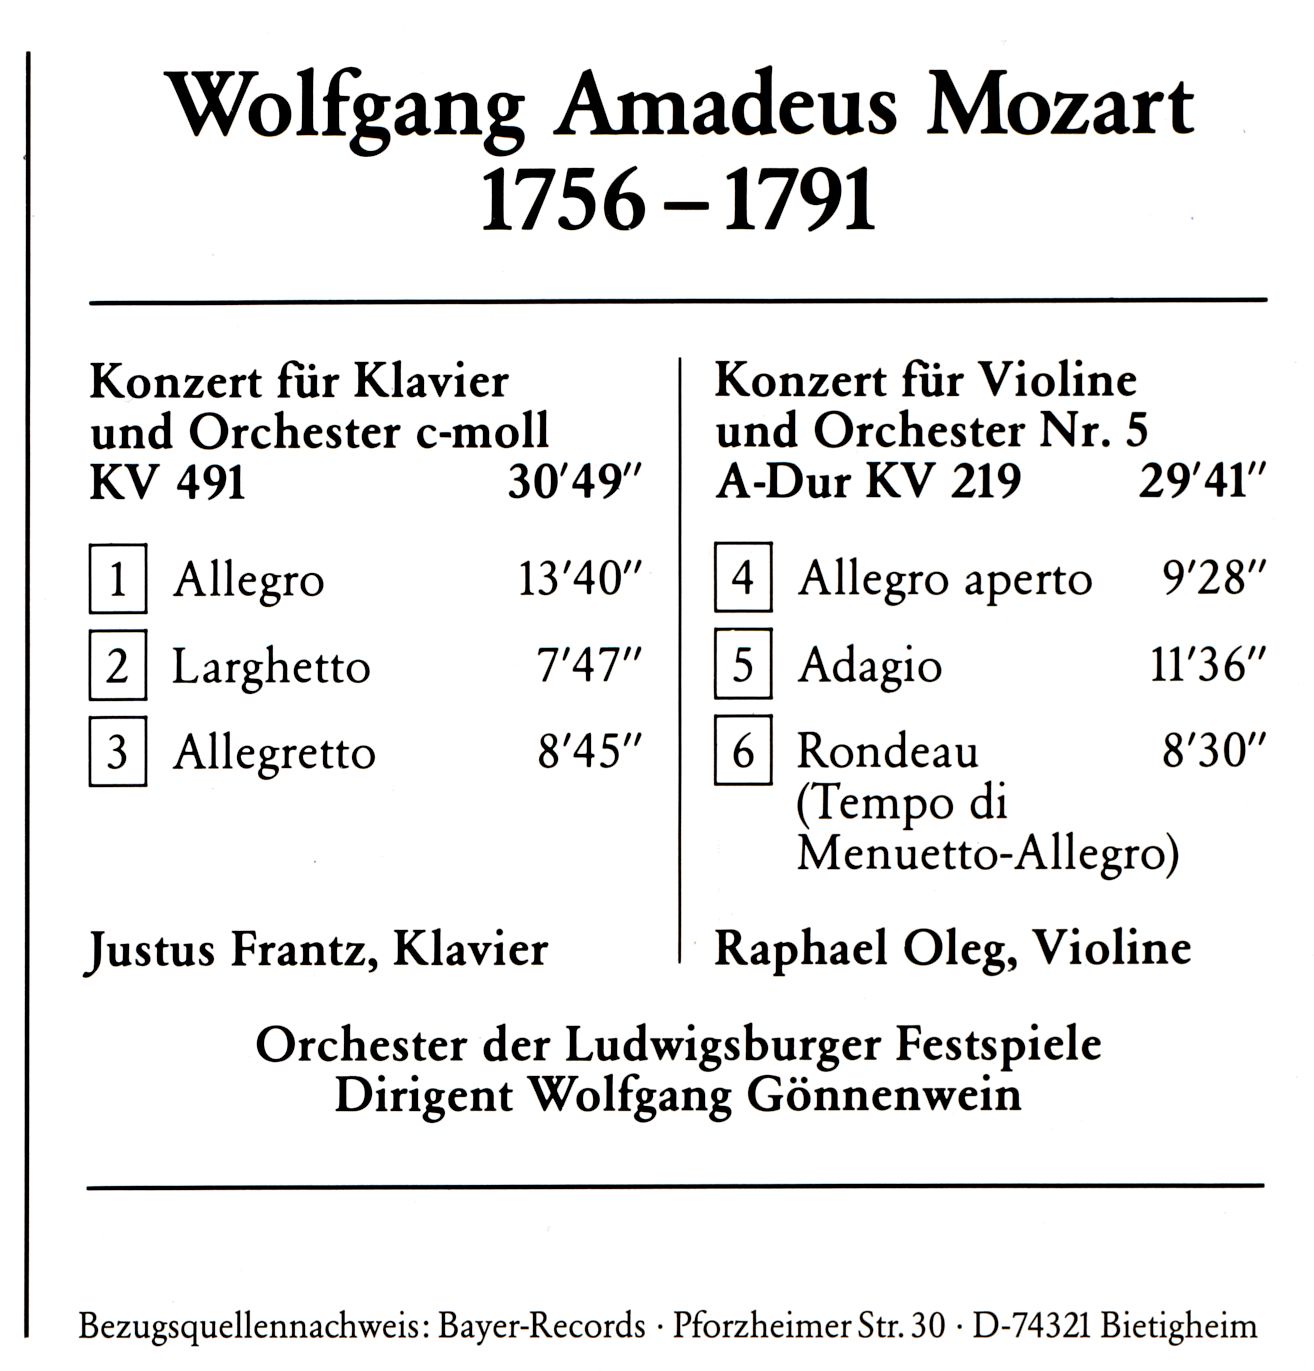 Mozart aus dem Ludwigsburger Schloß II